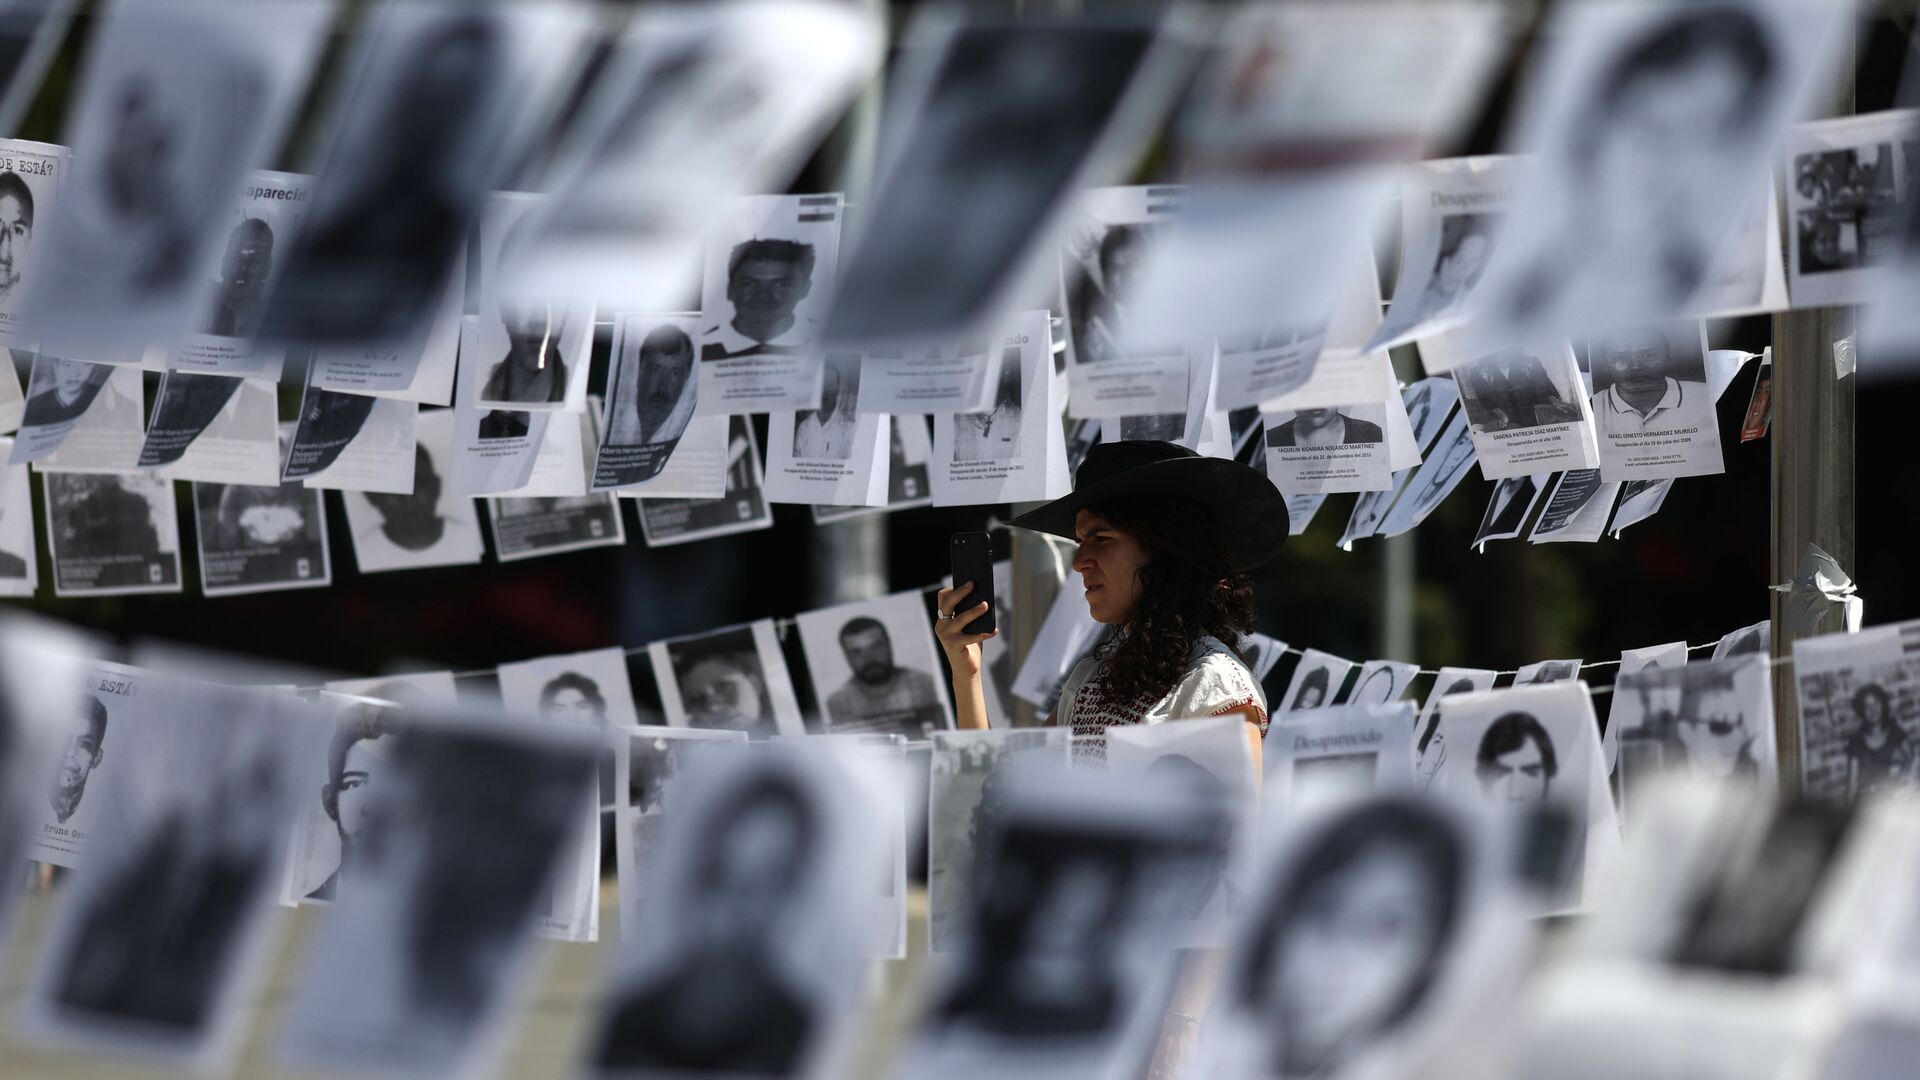 Fotos de desaparecidos en México (imagen referencial) - Sputnik Mundo, 1920, 30.08.2021